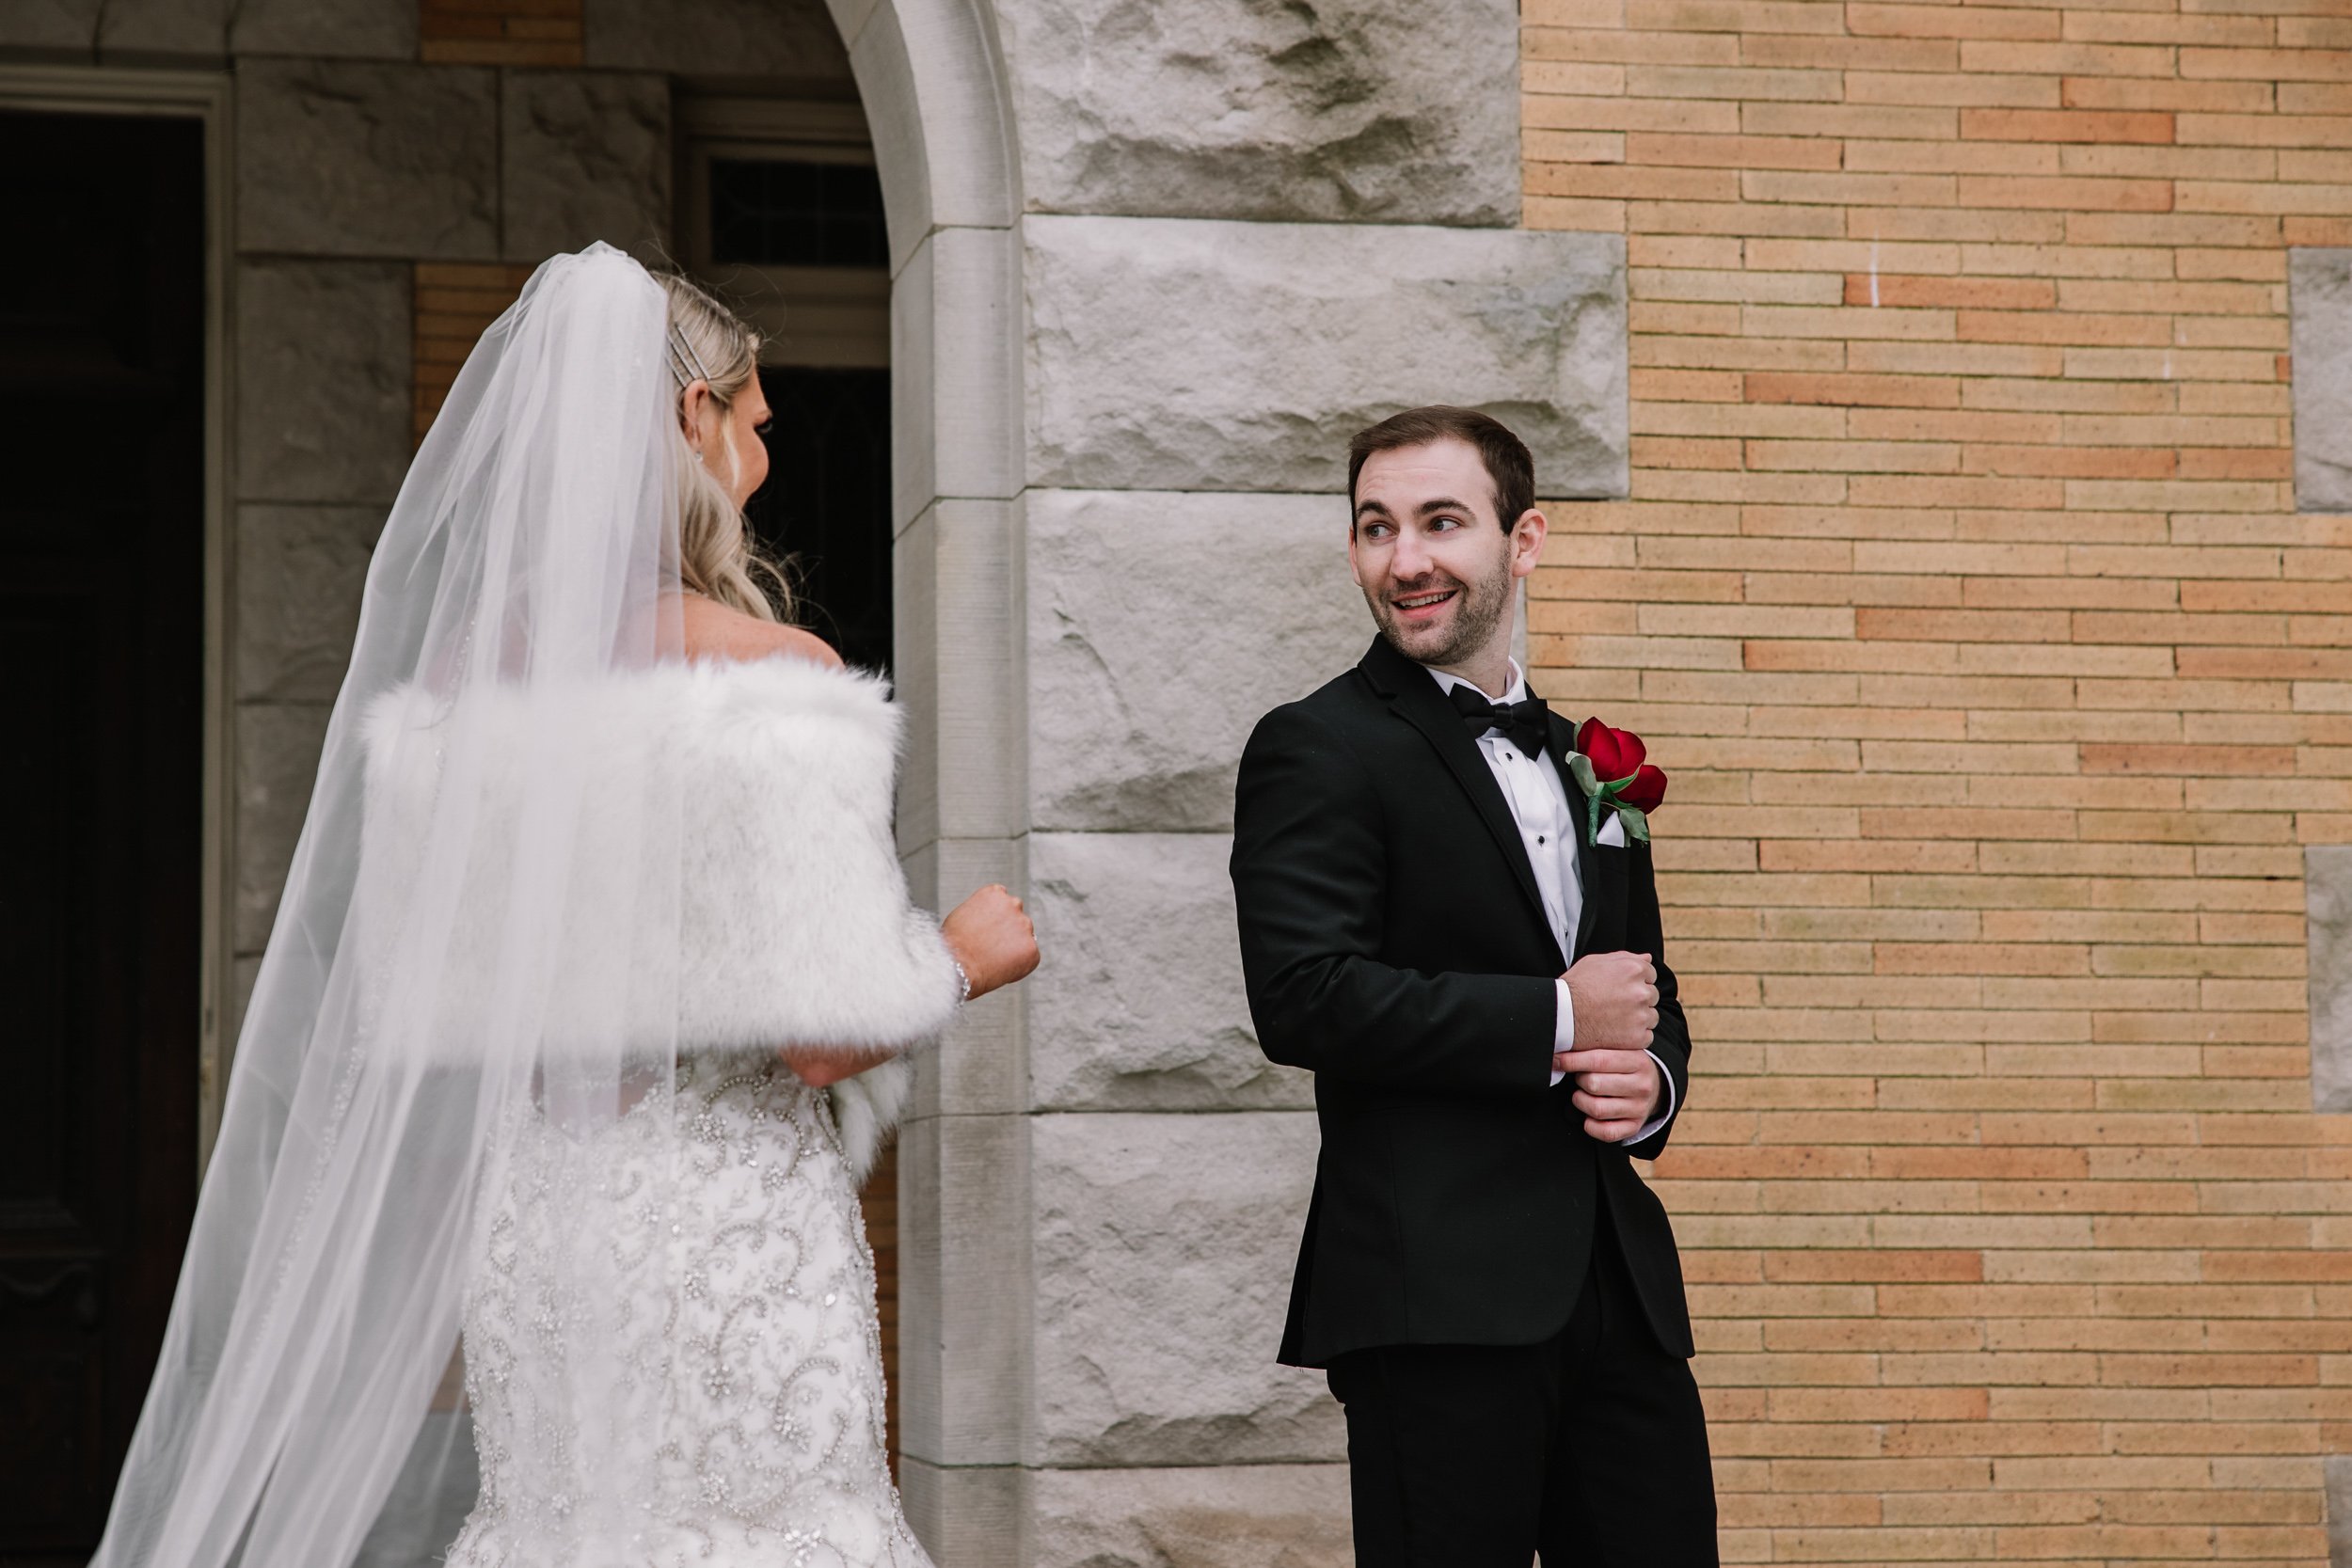 LUCEINS MANOR WEDDING PHOTOGRAPHY - FEB 2021 - 26.jpg